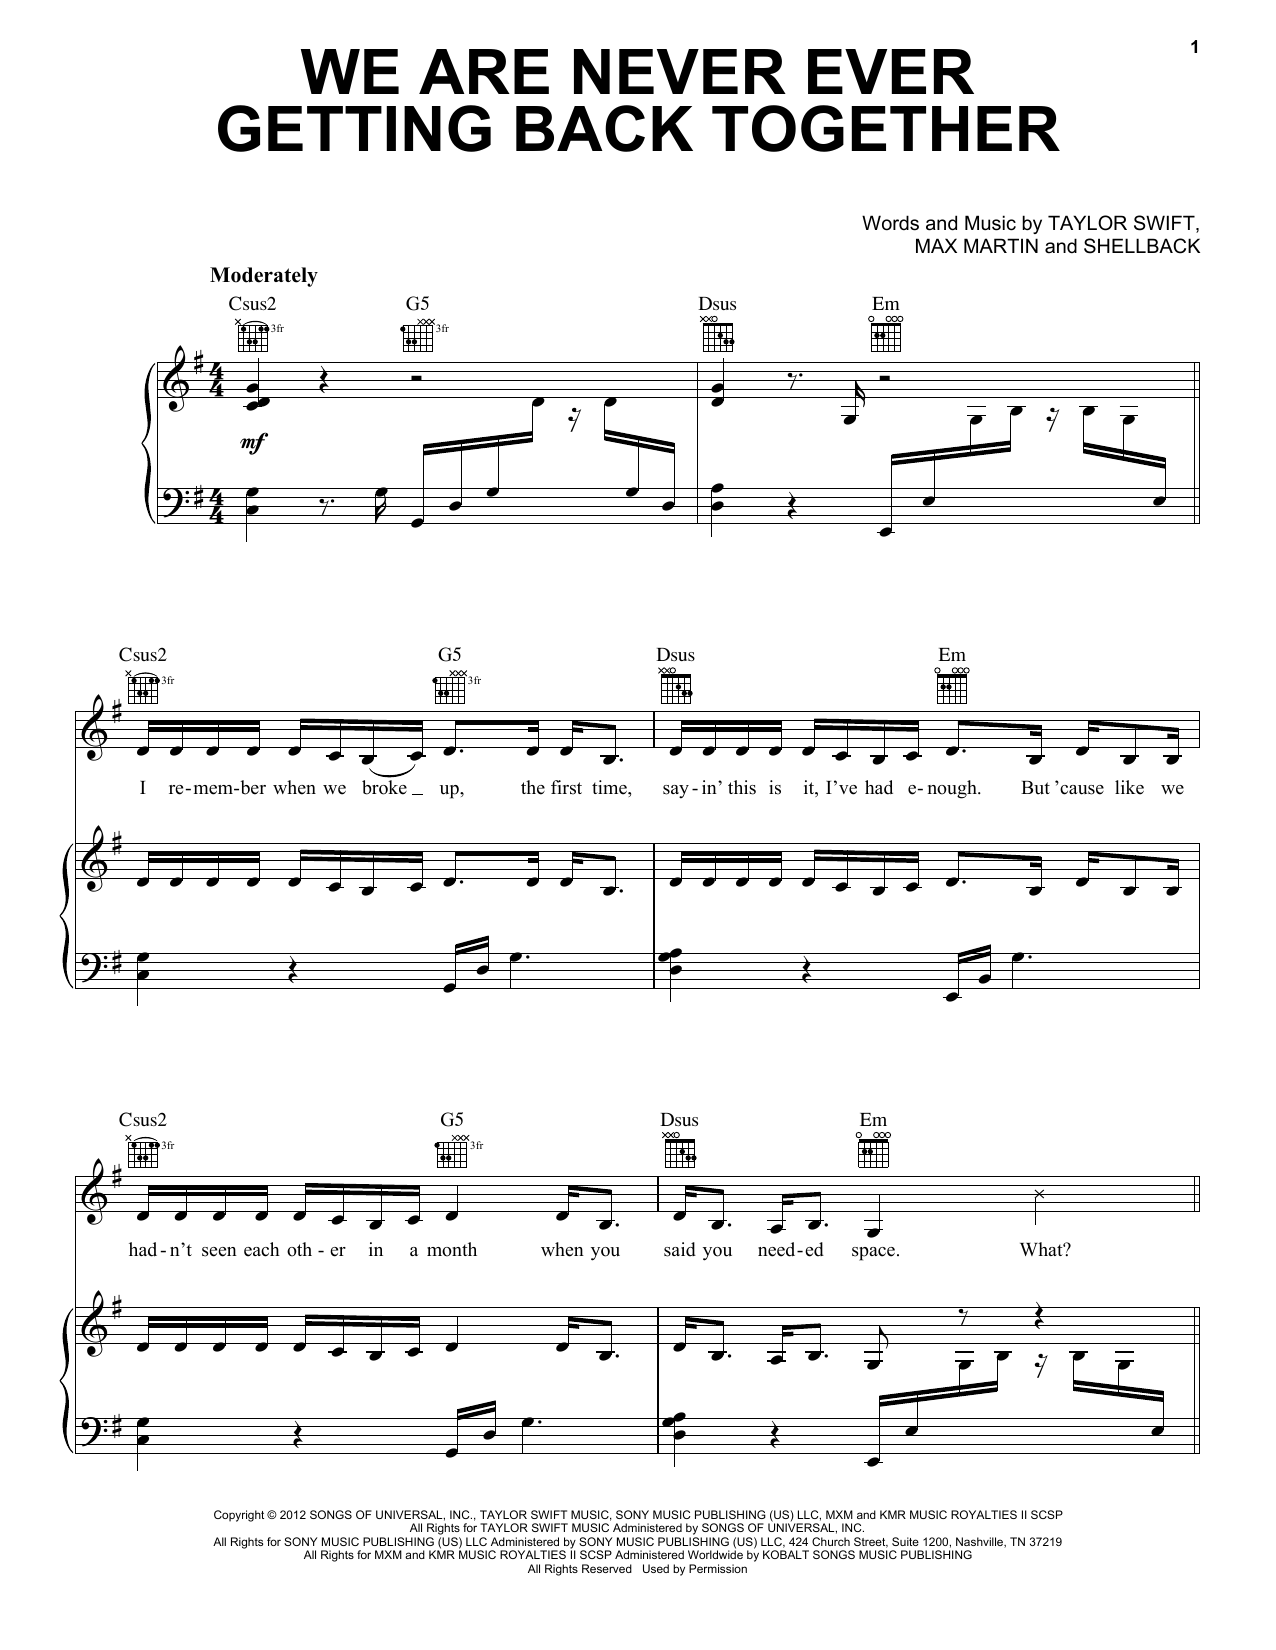 Taylor Swift We Are Never Ever Getting Back Together Sheet Music Notes & Chords for Ukulele - Download or Print PDF